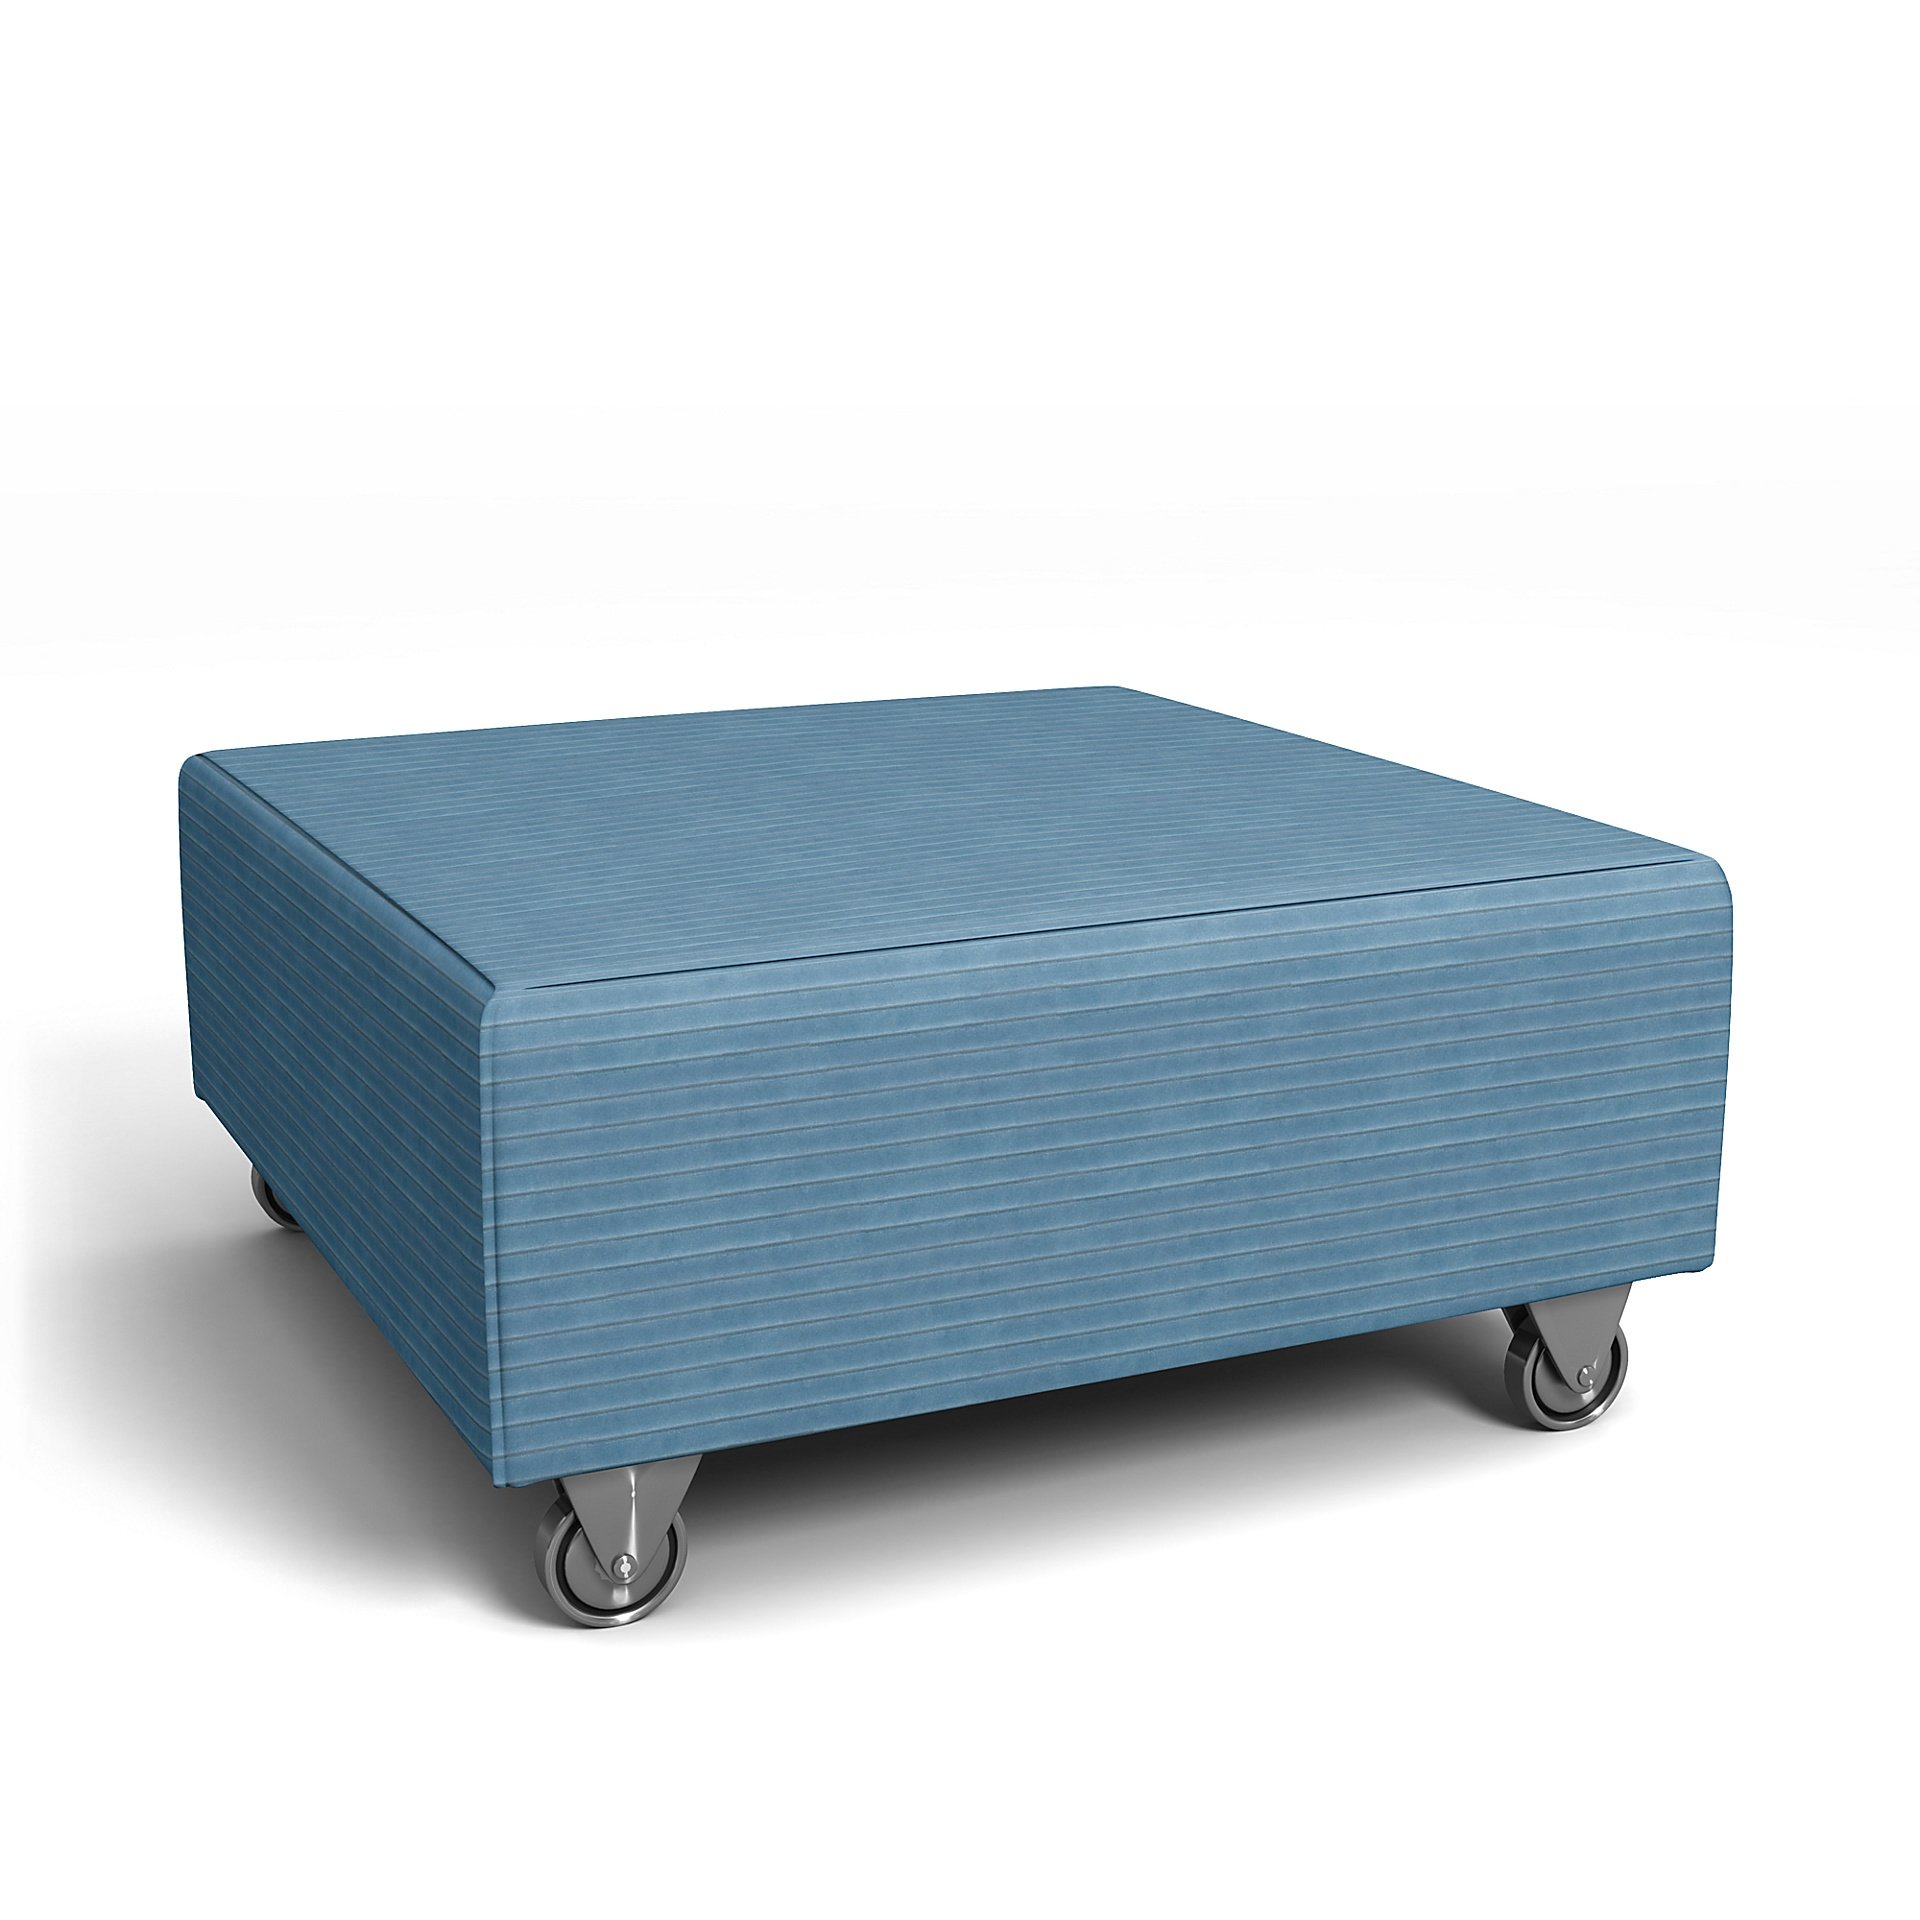 IKEA - Falsterbo Footstool Cover, Sky Blue, Corduroy - Bemz